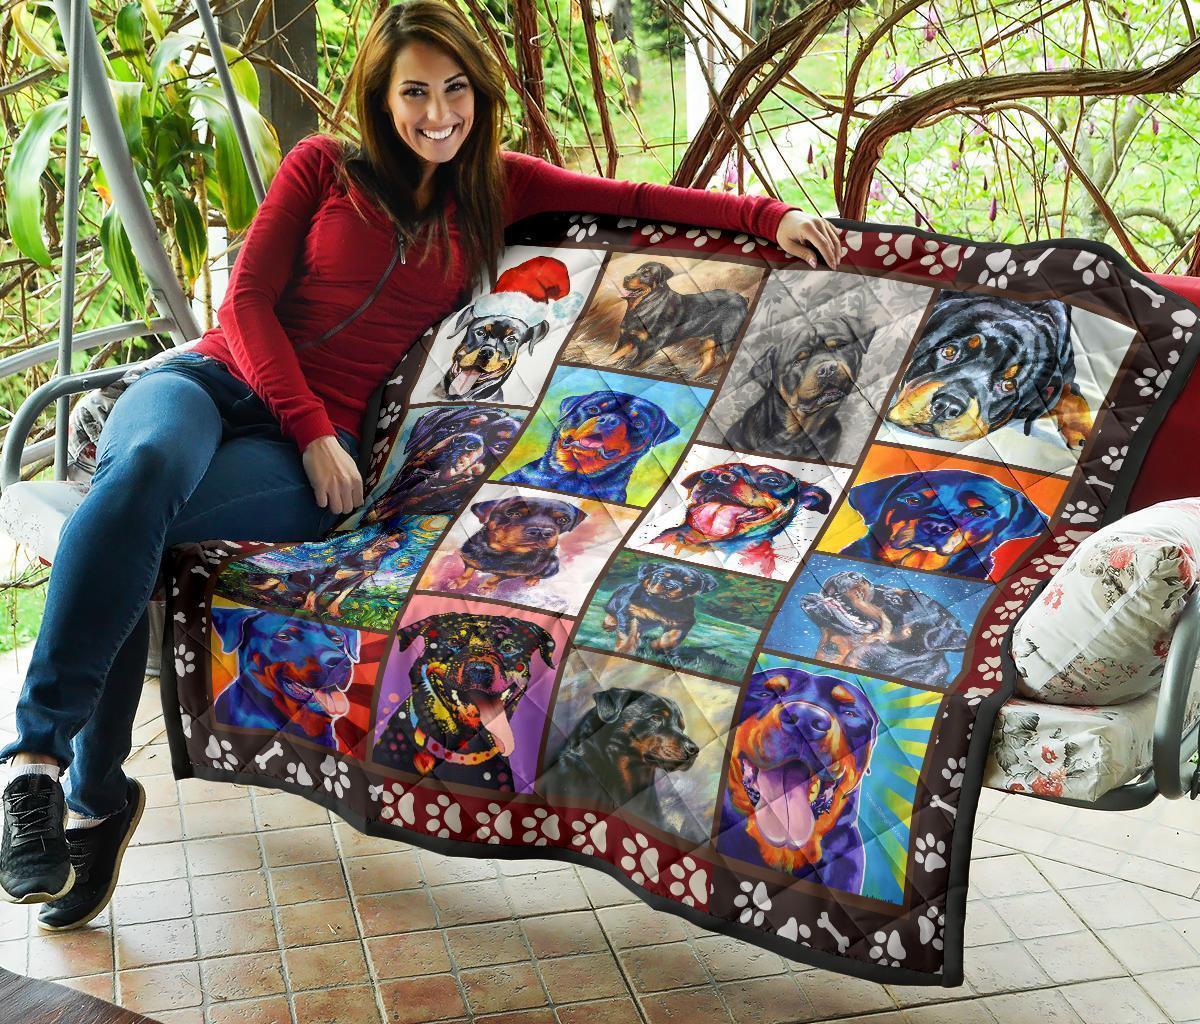 Rottweiler Dog Quilt Blanket Amazing-Gear Wanta